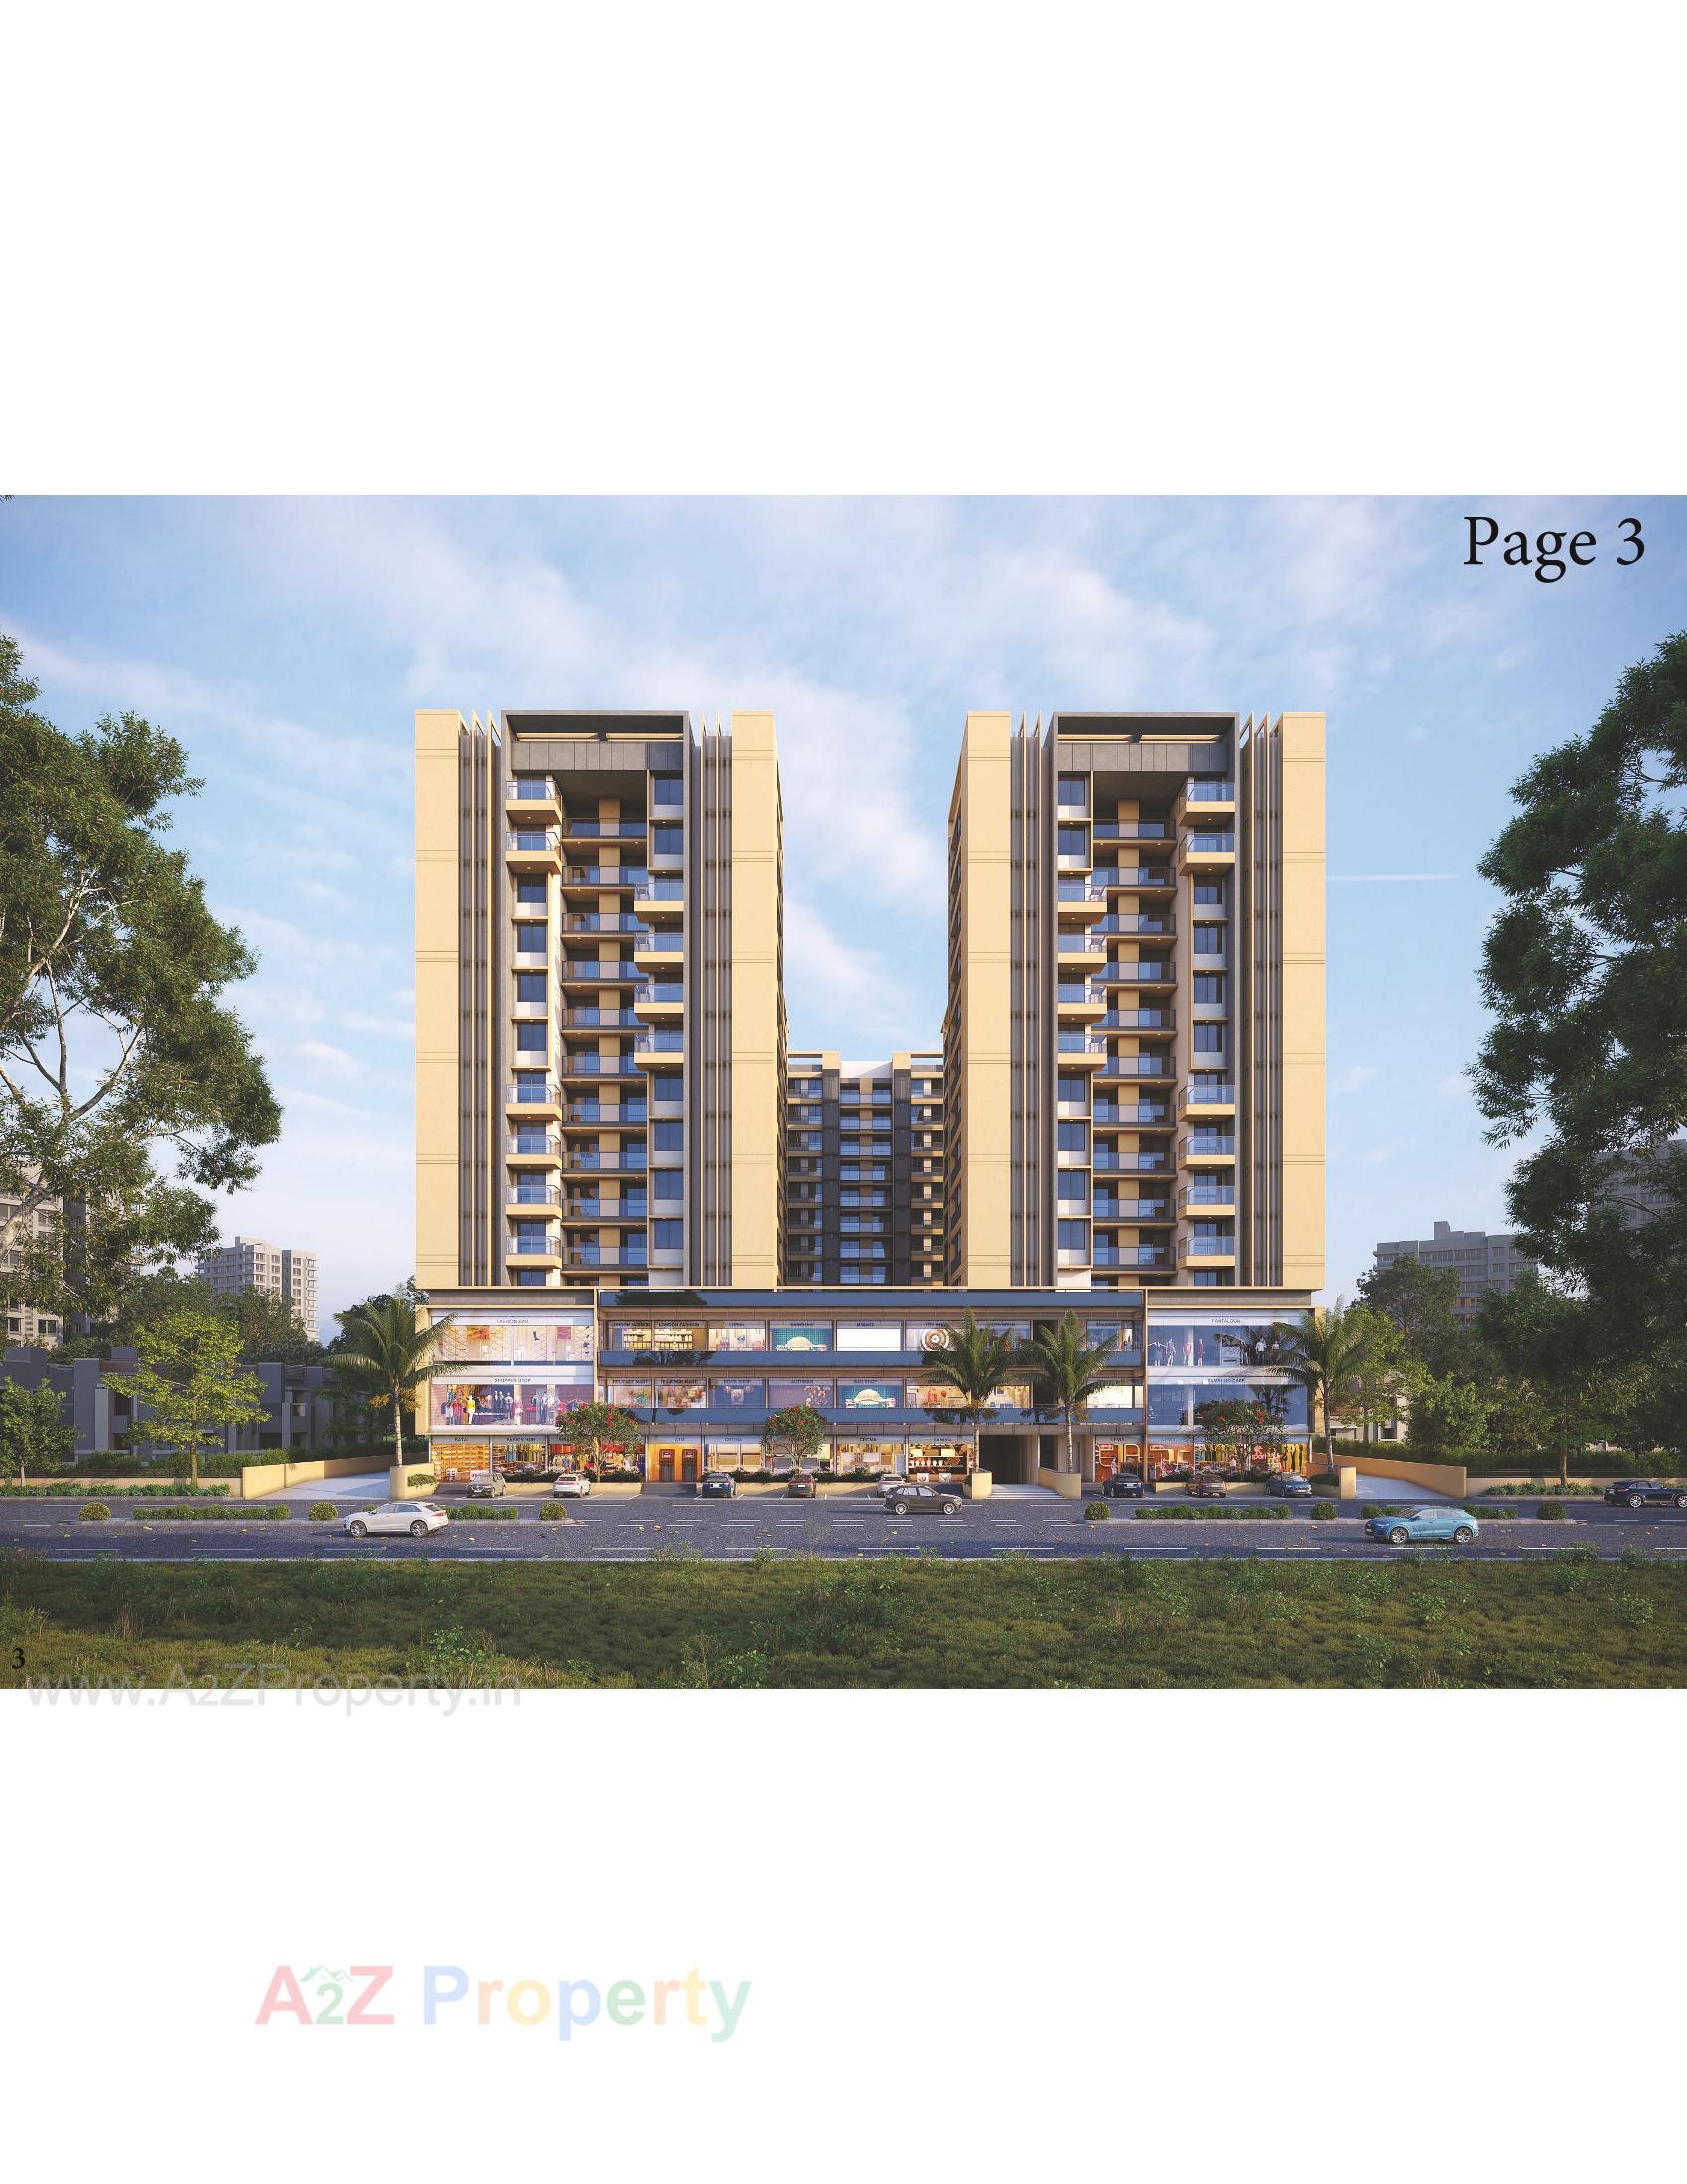 PALM PARADISE at Rajkot, Gujarat, by Bridge Studio - Unbuilt Ideas